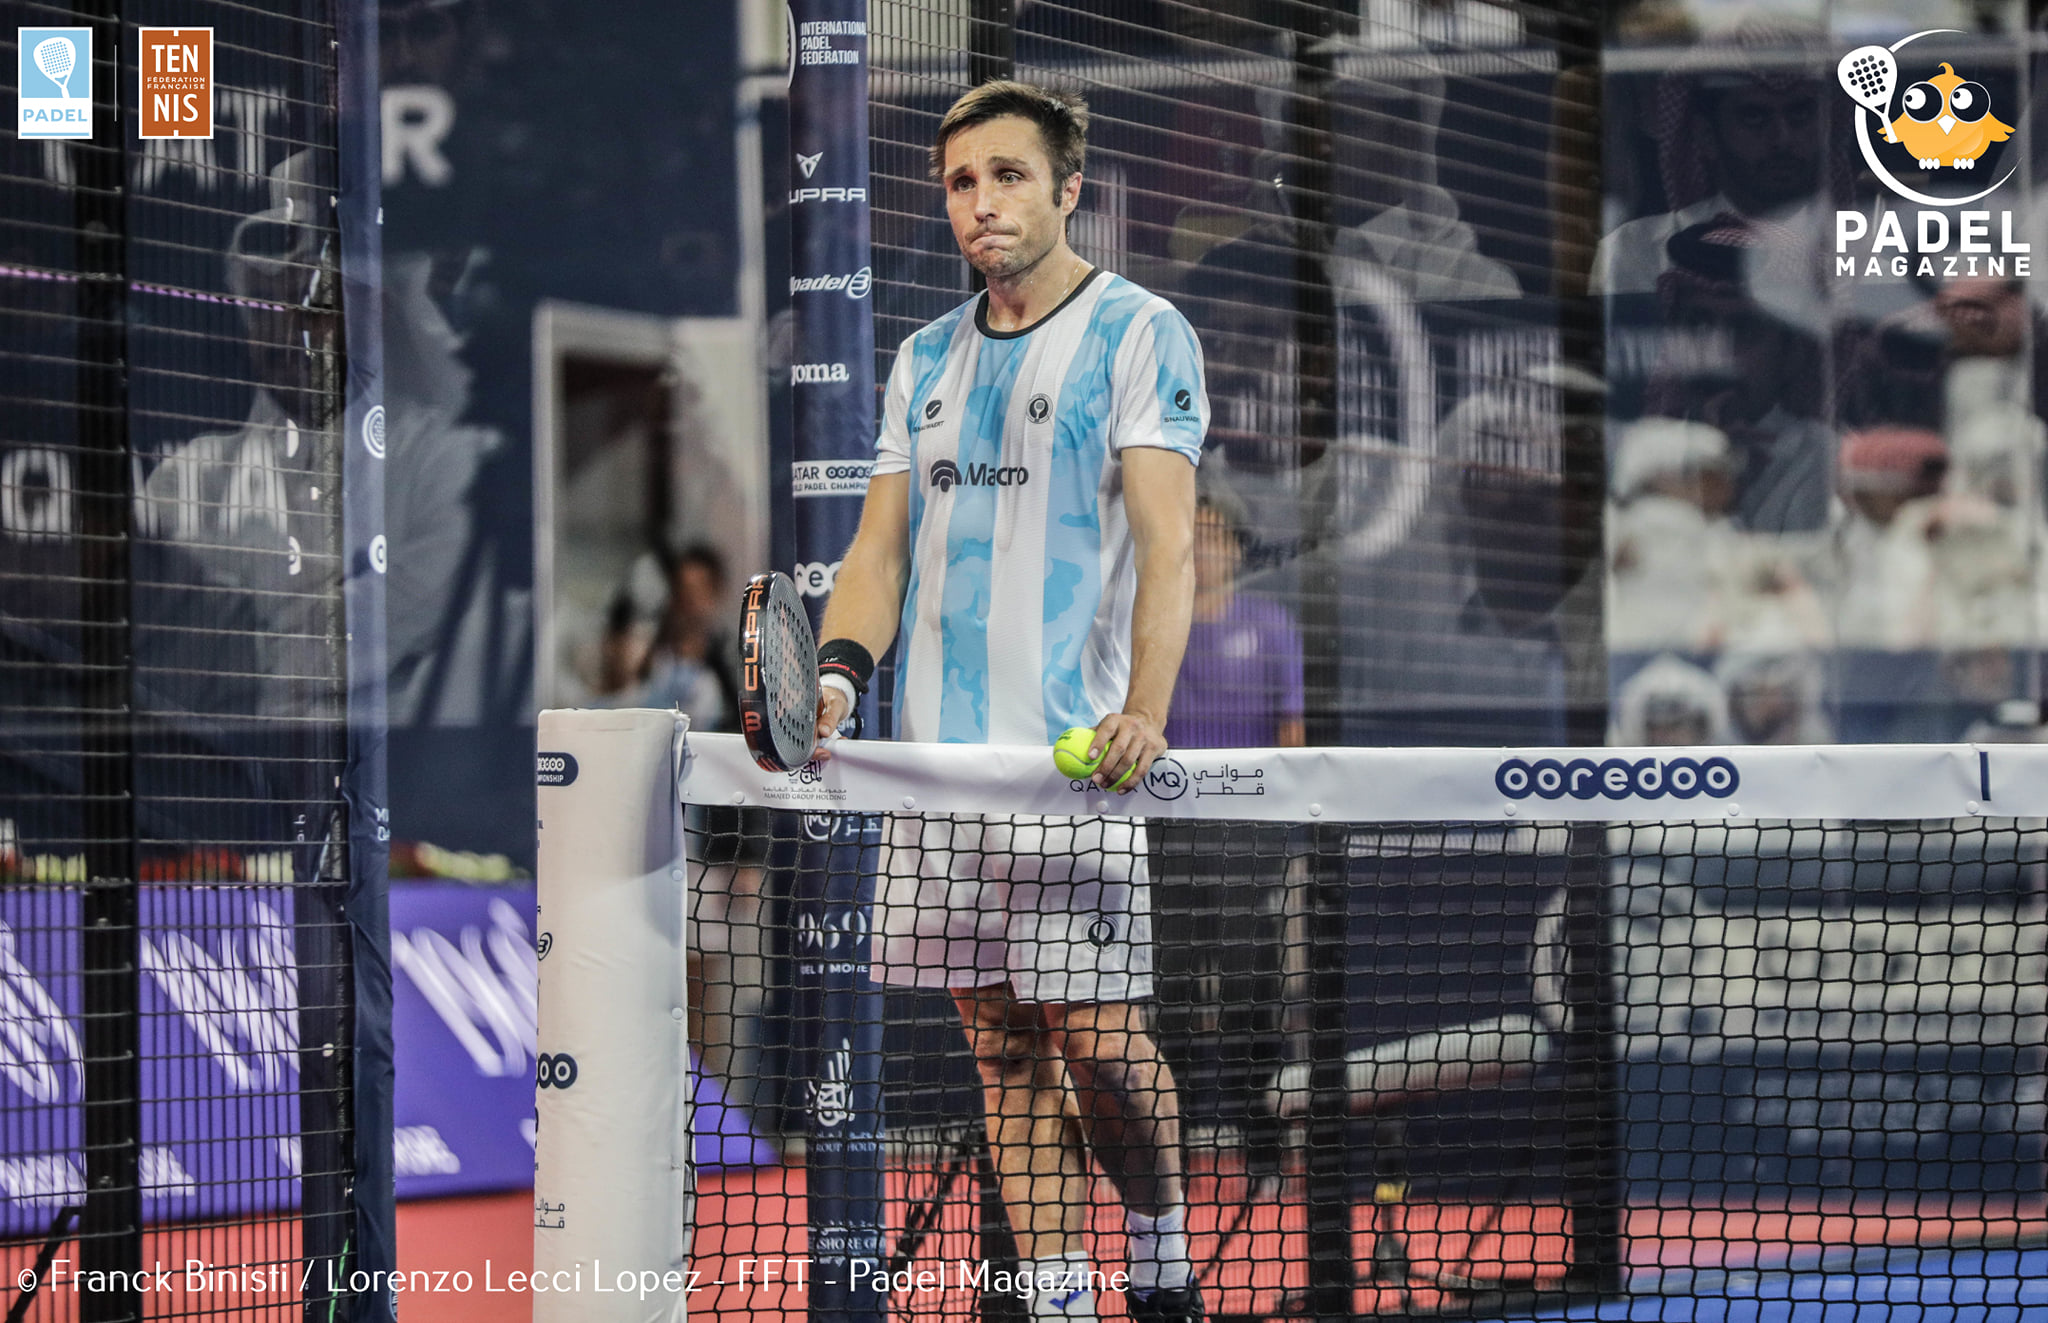 Fernando belasteguin sadness world defeat Argentina Qatar 2020